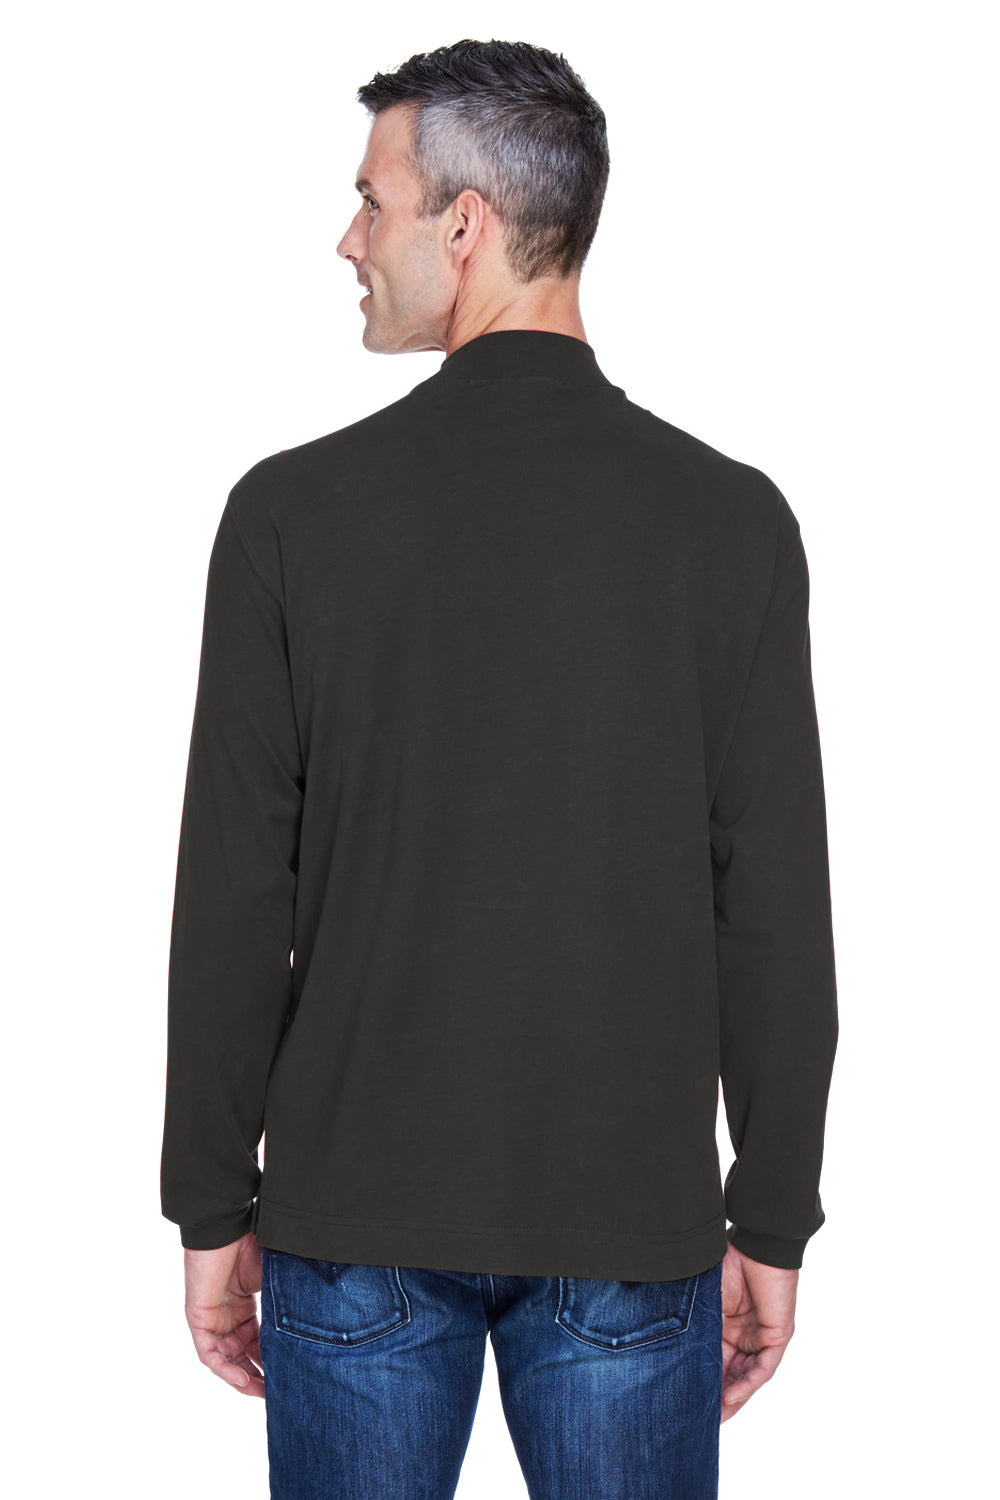 Devon & Jones D420 Mens Sueded Jersey Long Sleeve Mock Neck T-Shirt Black Back